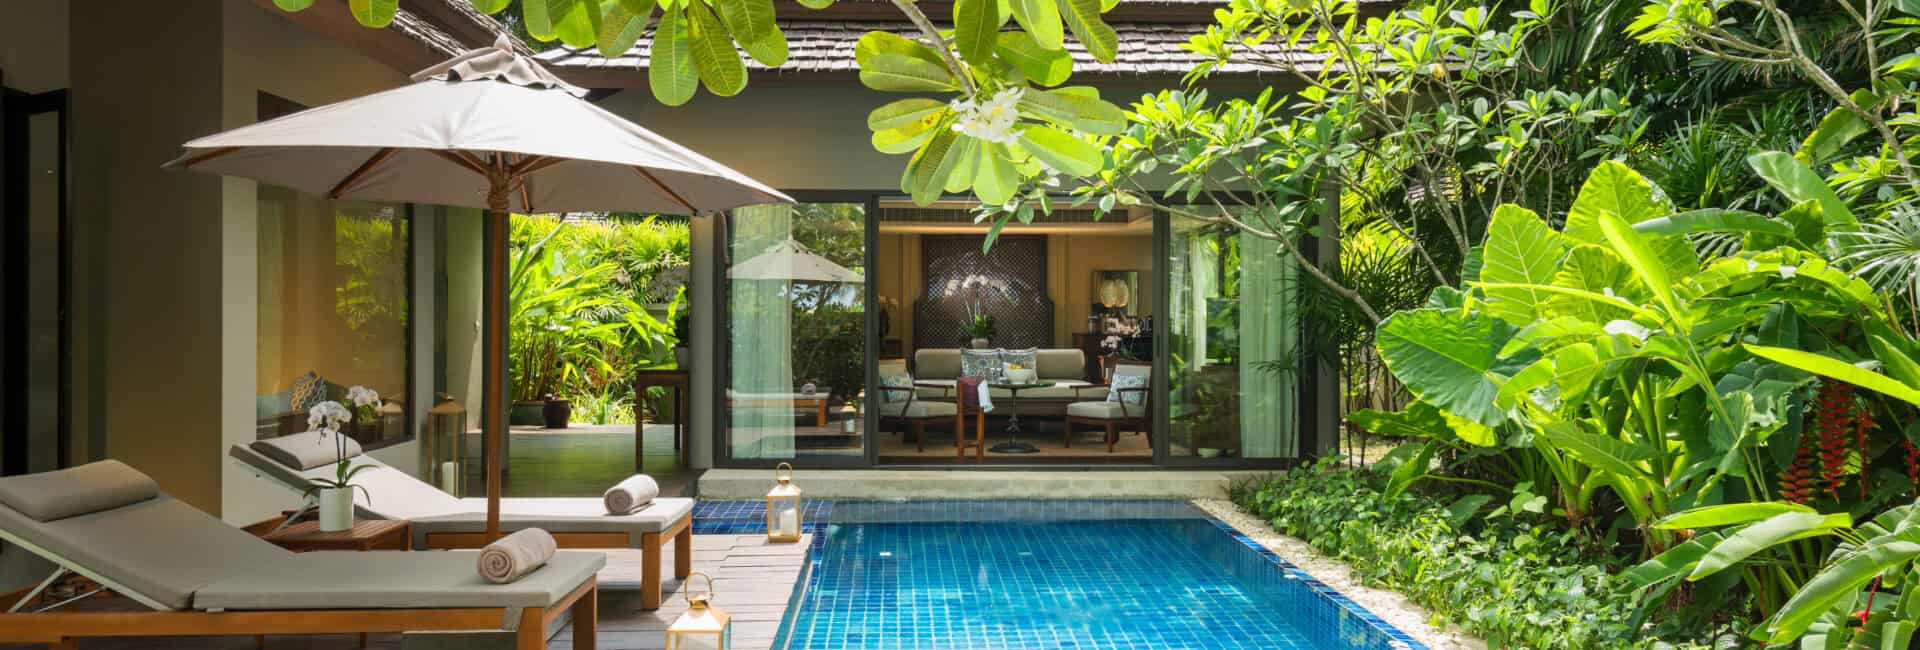 Anantara Layan Phuket - Room with private pool